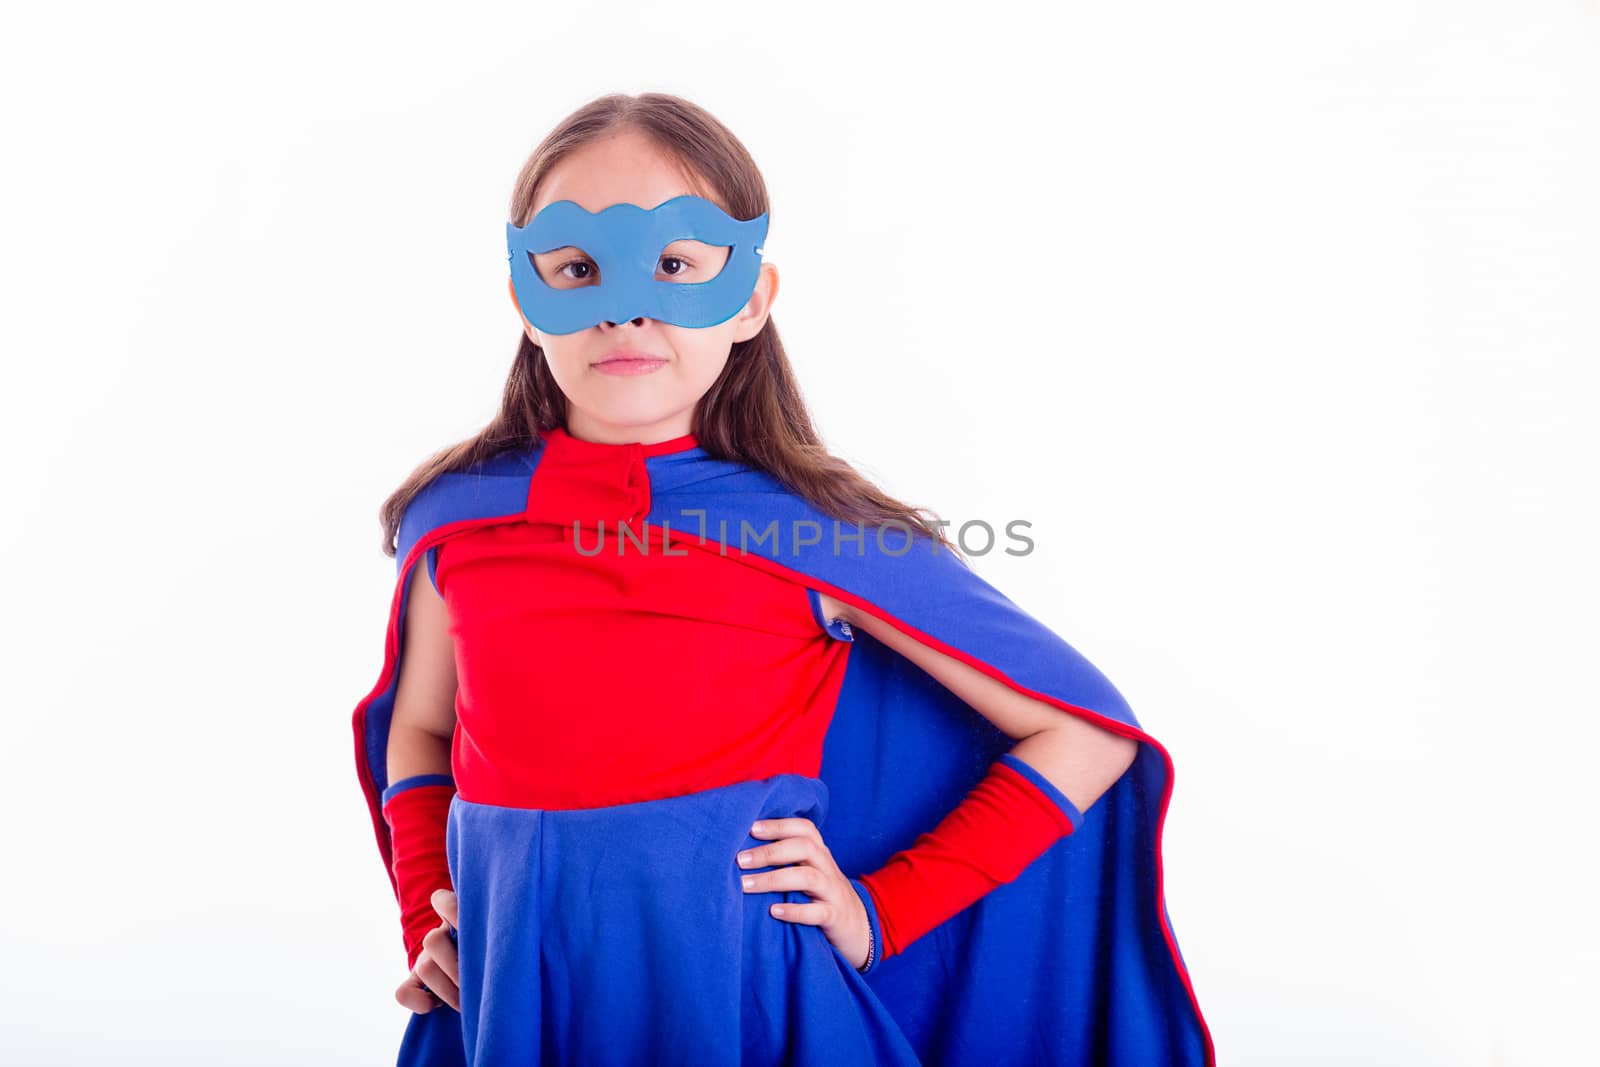 Girl in superhero costume by imagesbykenny